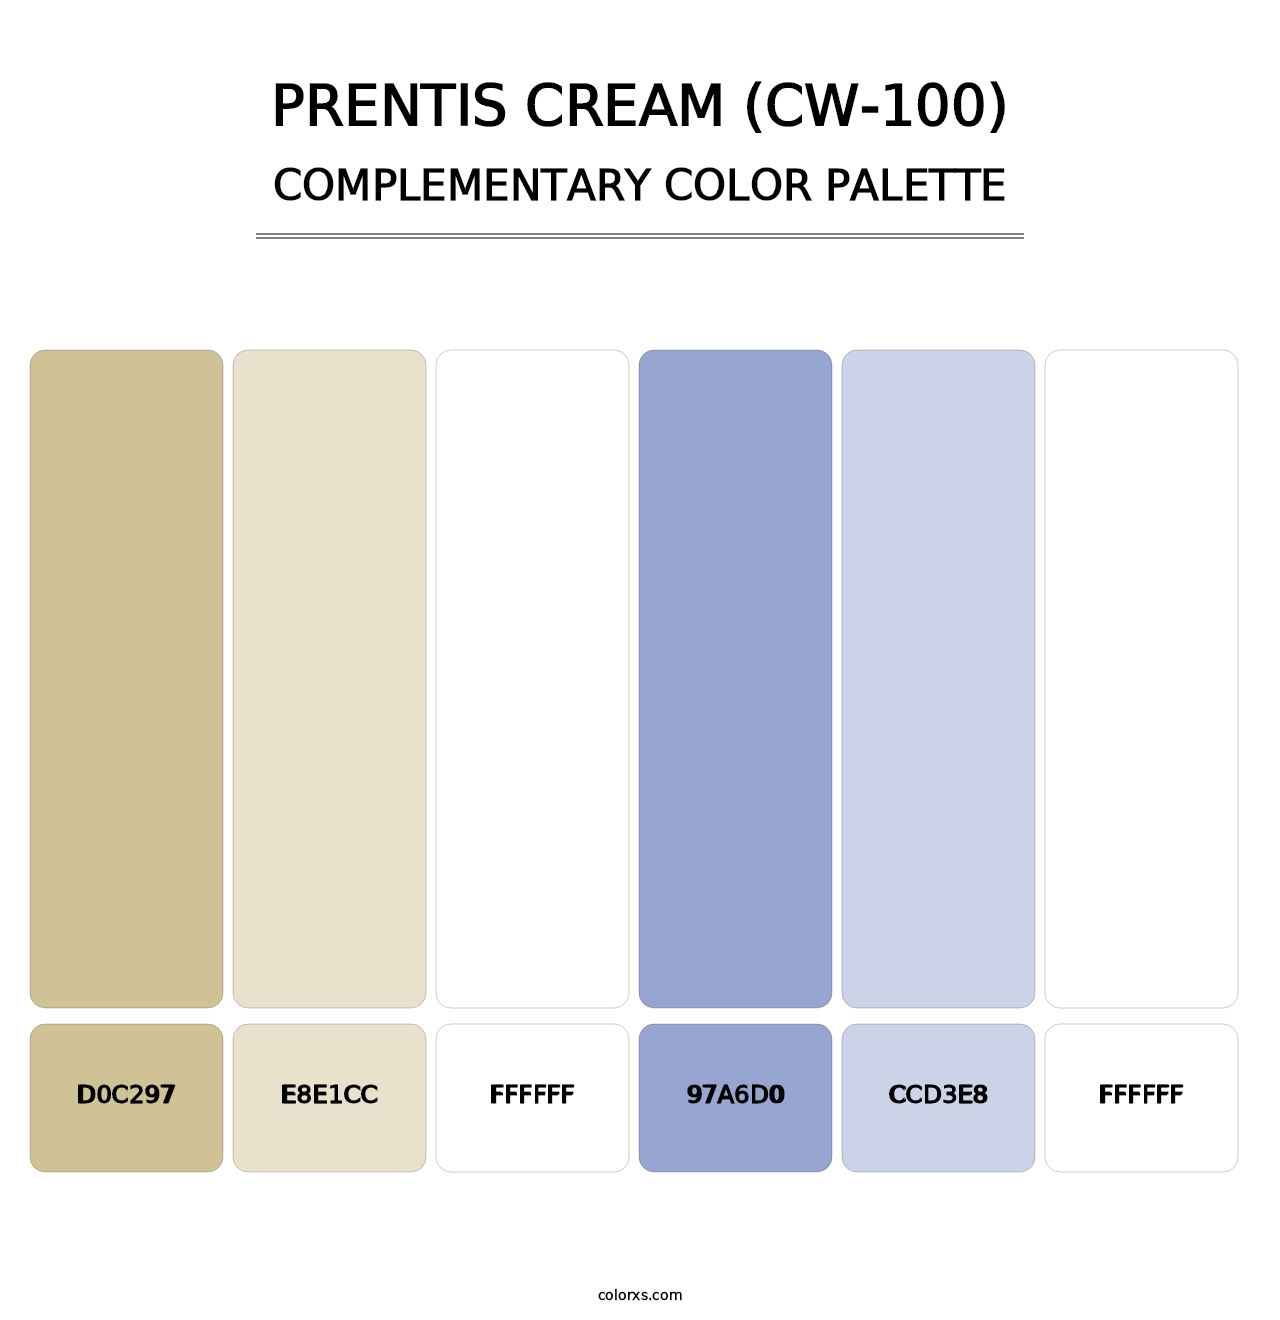 Prentis Cream (CW-100) - Complementary Color Palette